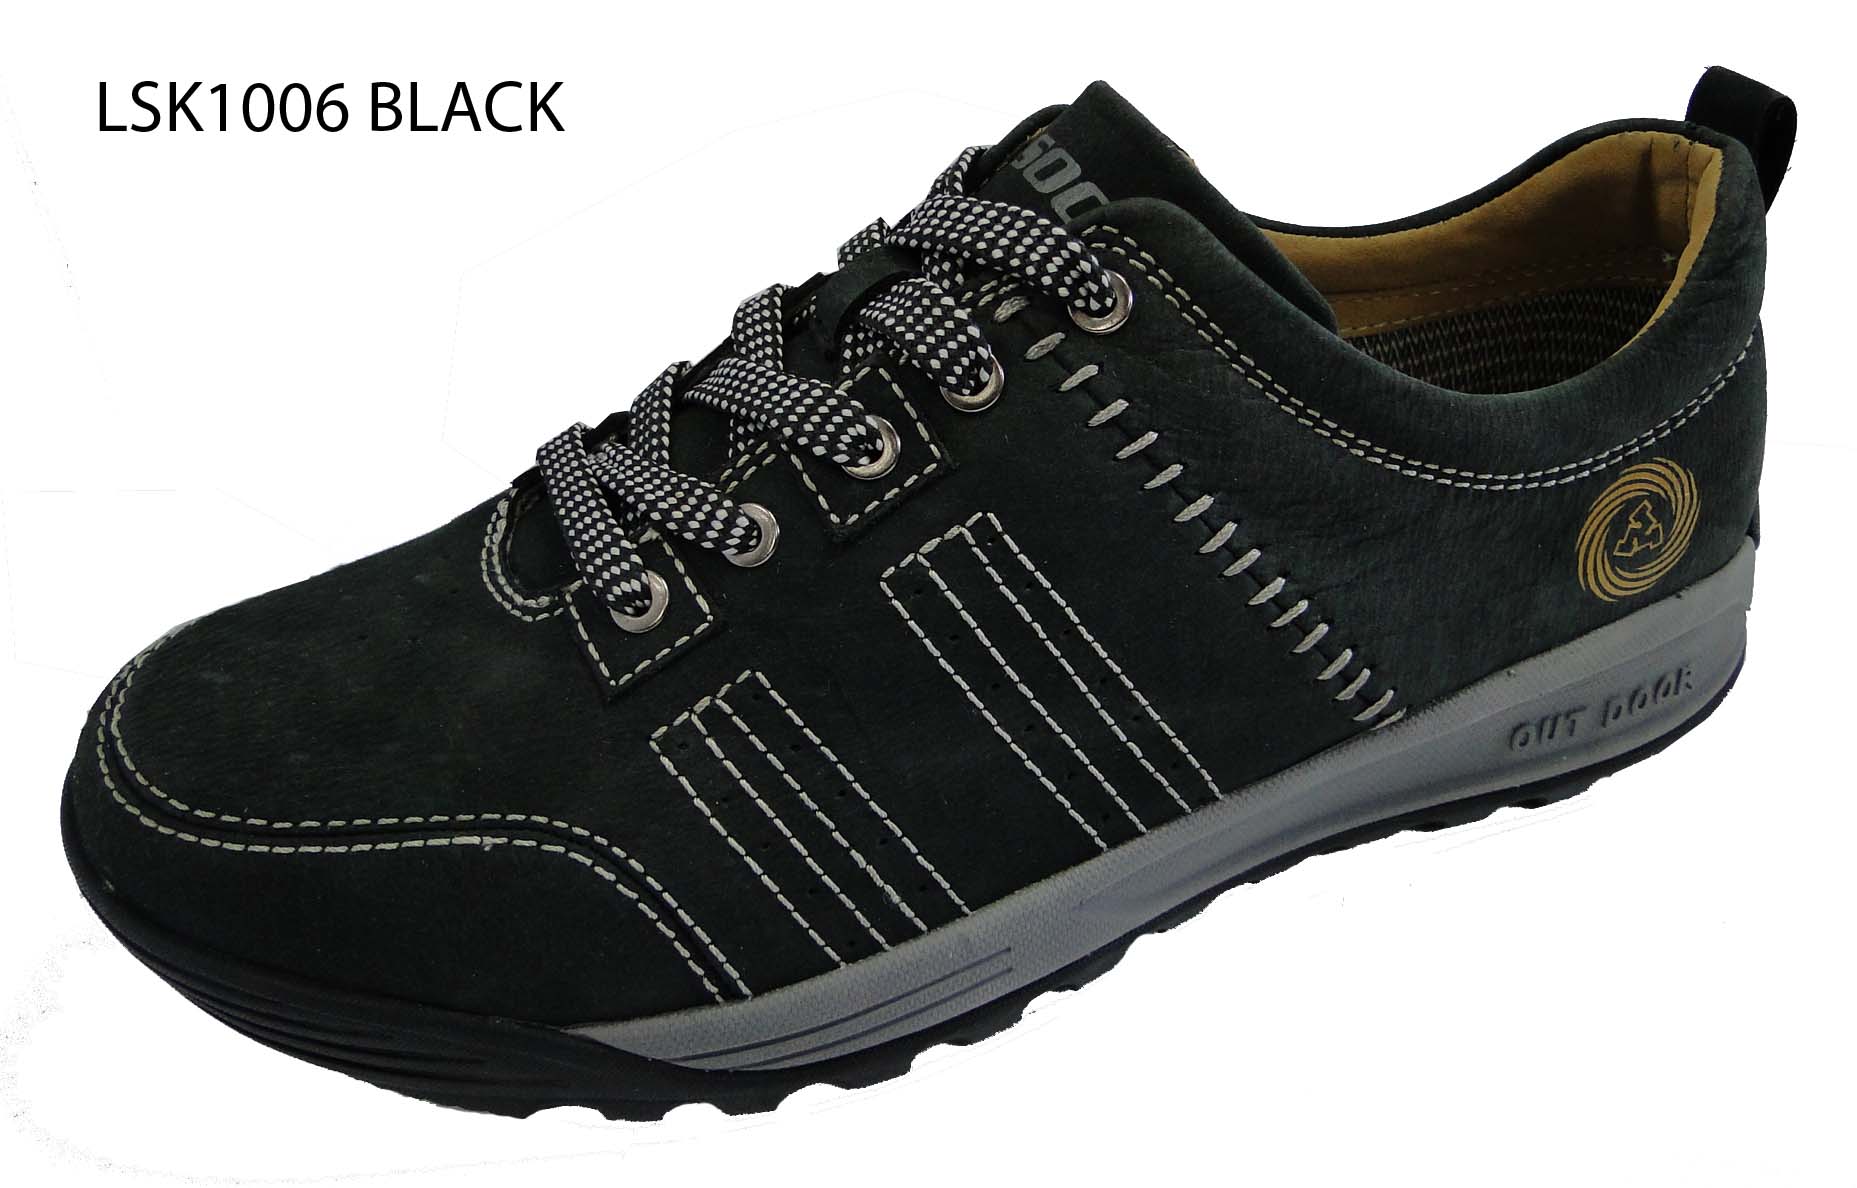 LSK1006_BLACK_Взуття для туризму_42-46